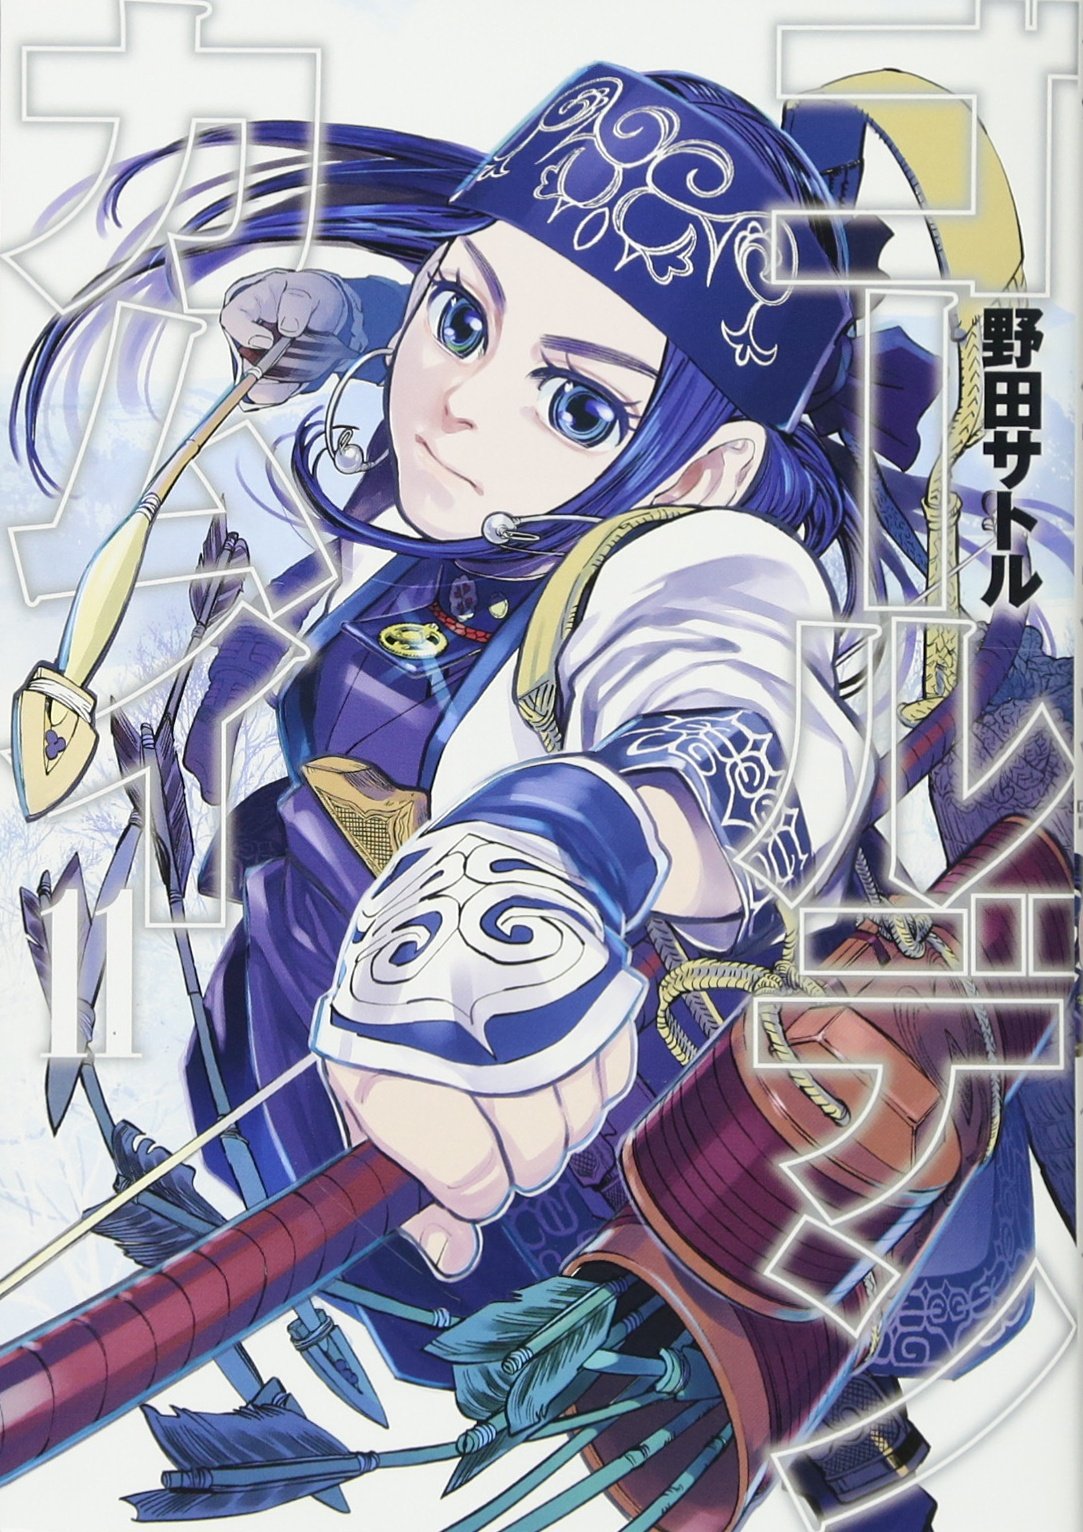 Golden Kamuy Japanese manga volume 11 front cover